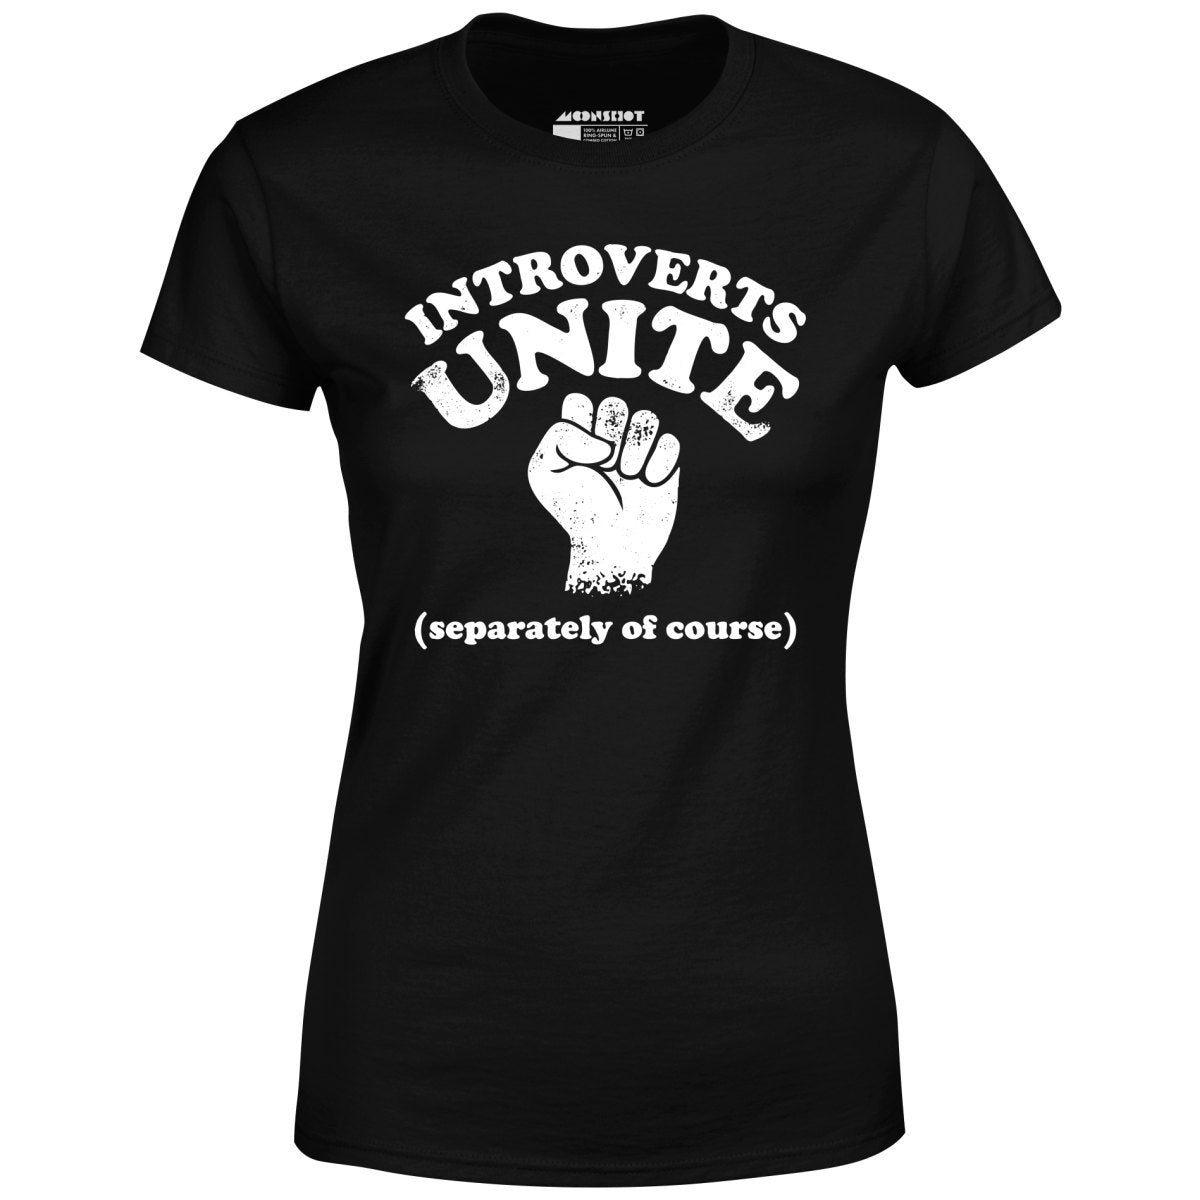 Introverts Unite - Women's T-Shirt